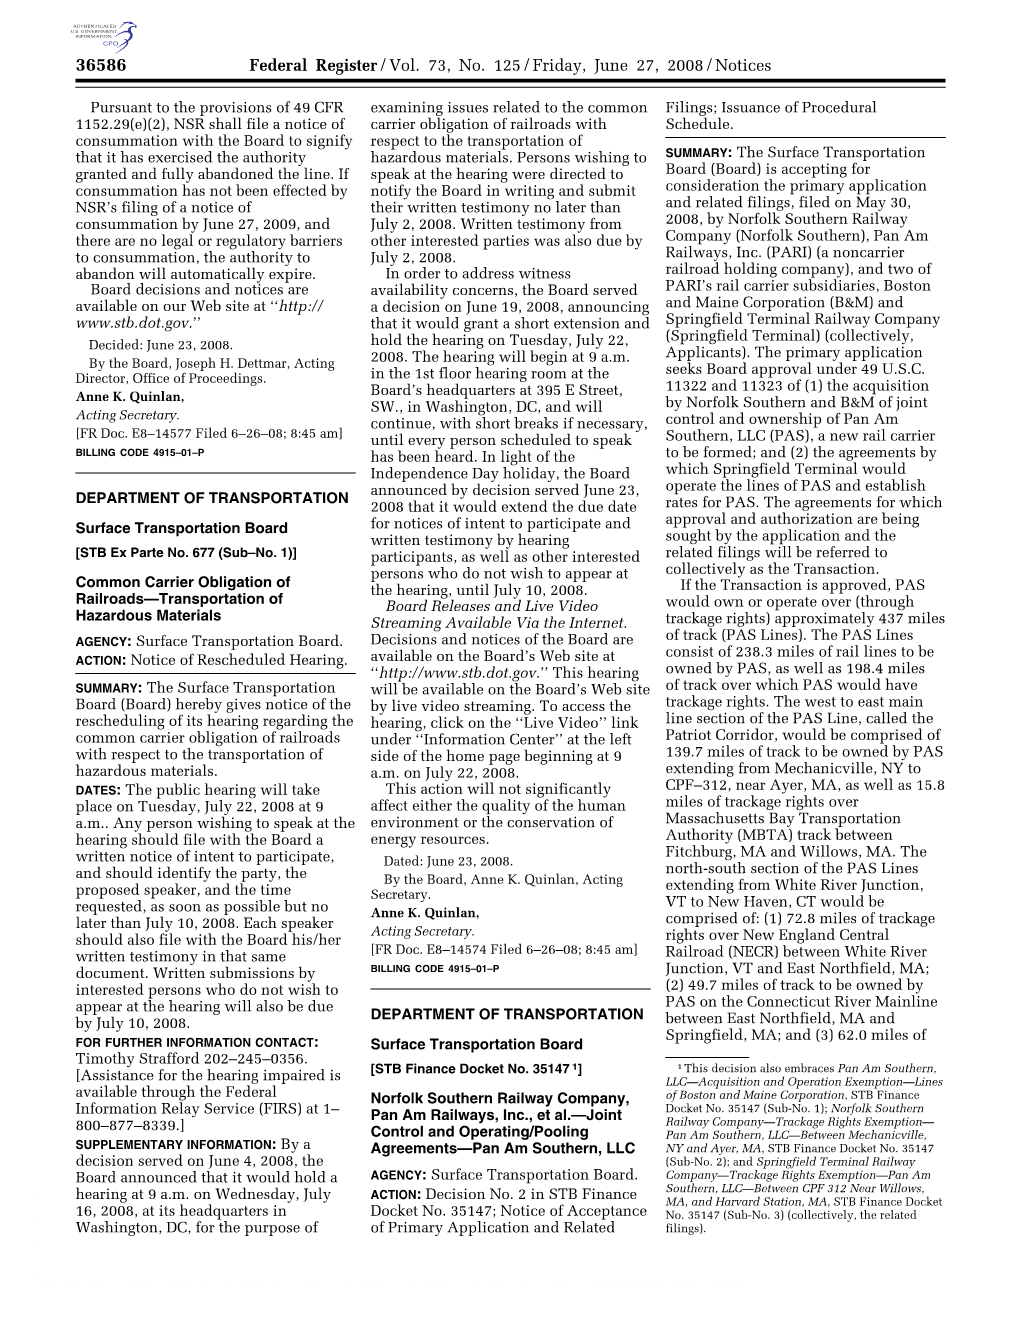 Federal Register/Vol. 73, No. 125/Friday, June 27, 2008/Notices